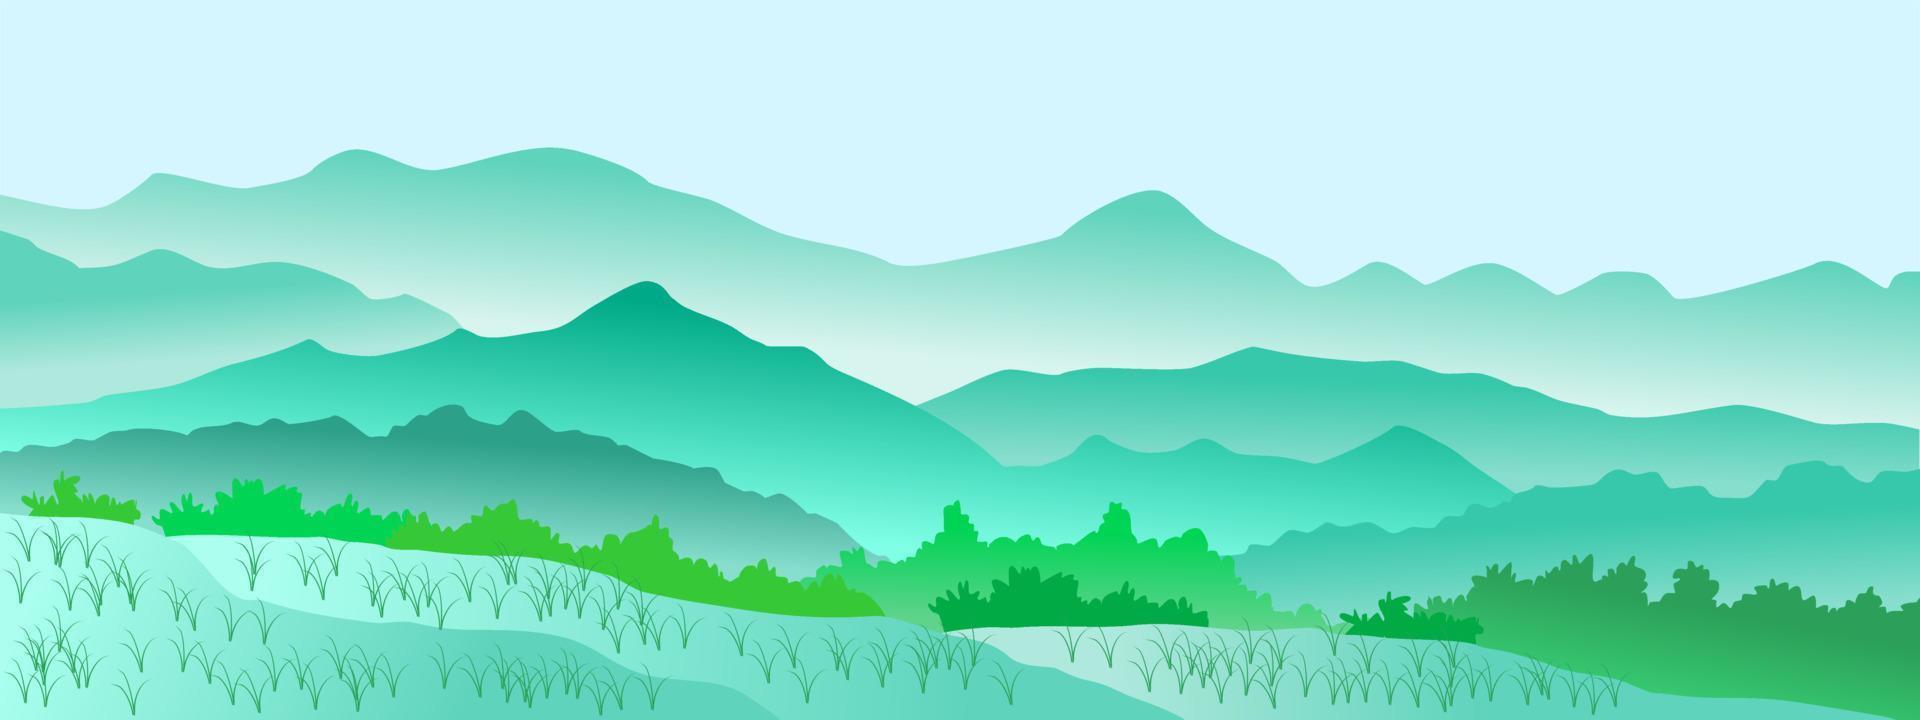 vector mountain ridge landscape background